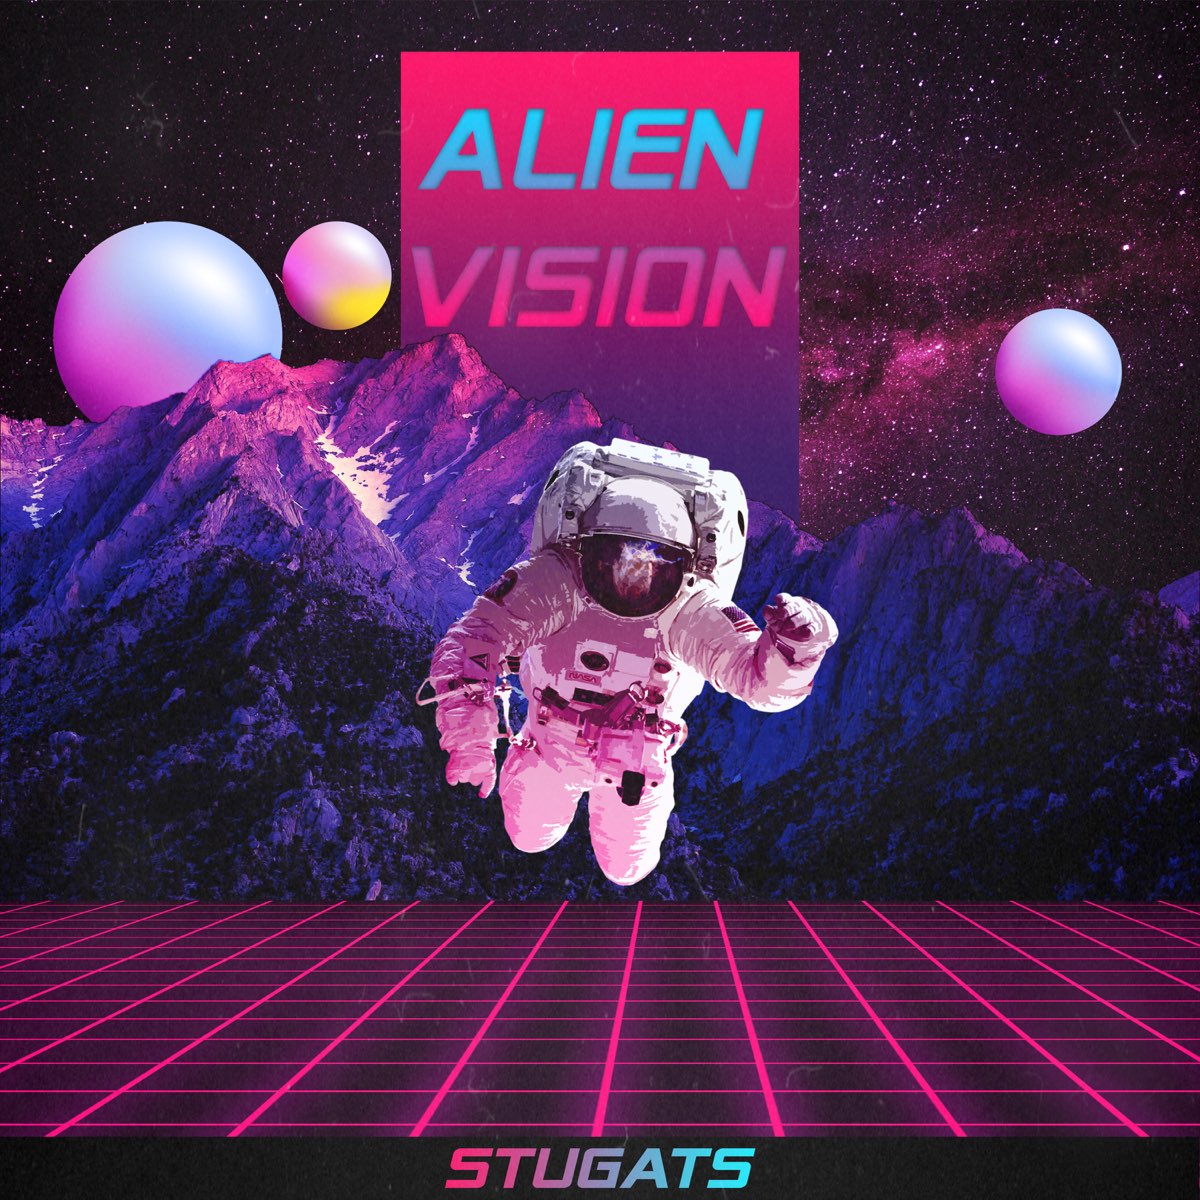 Alien Vision - Single - Album by STUGATS - Apple Music